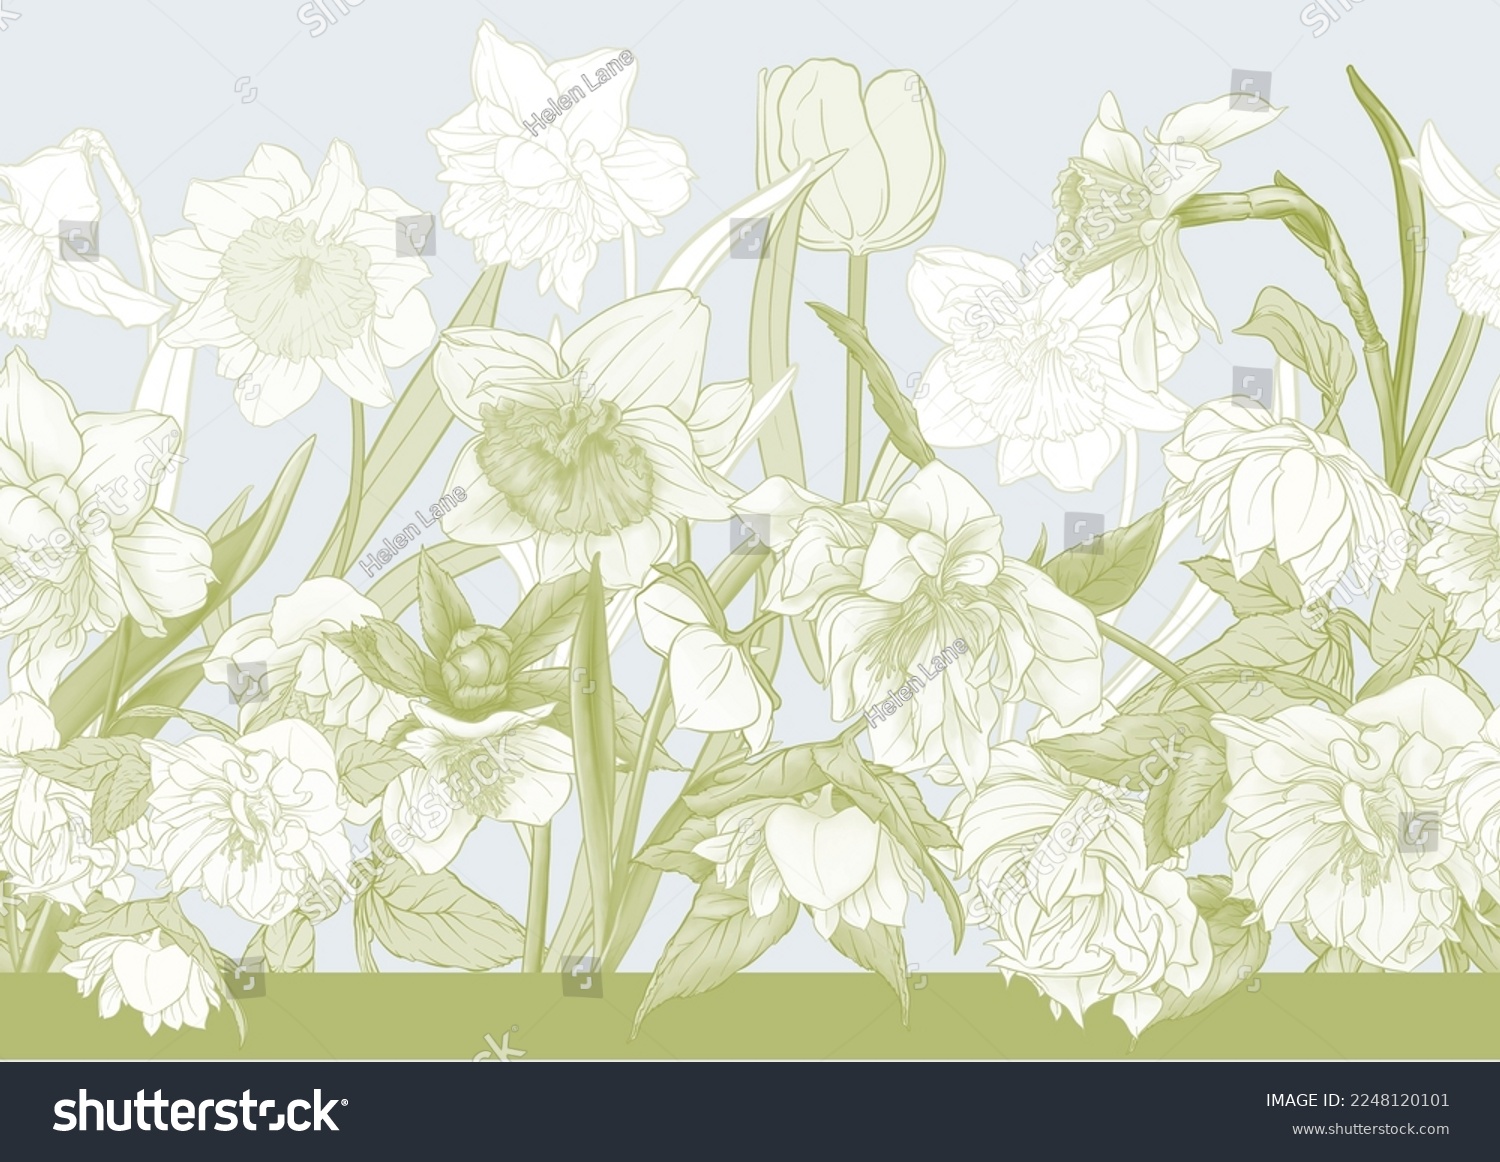 SVG of White hellebore flowers, the first spring flowering ranunculus. Spring floral motif. Seamless pattern, background. Vector illustration in botanical style svg